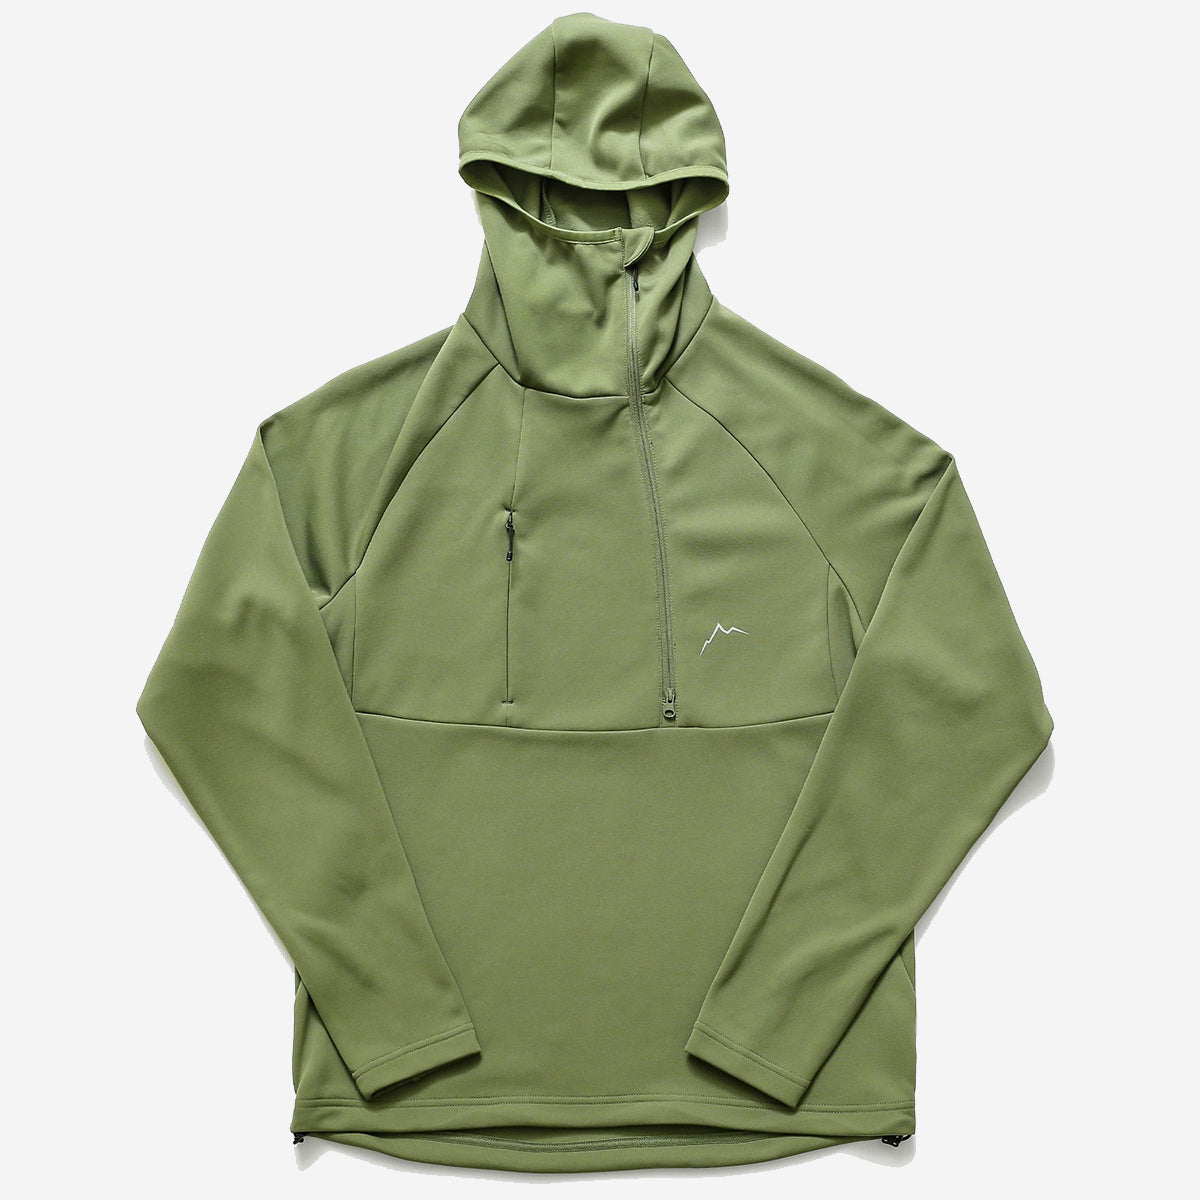 Warm interior zip sweatshirt with modal